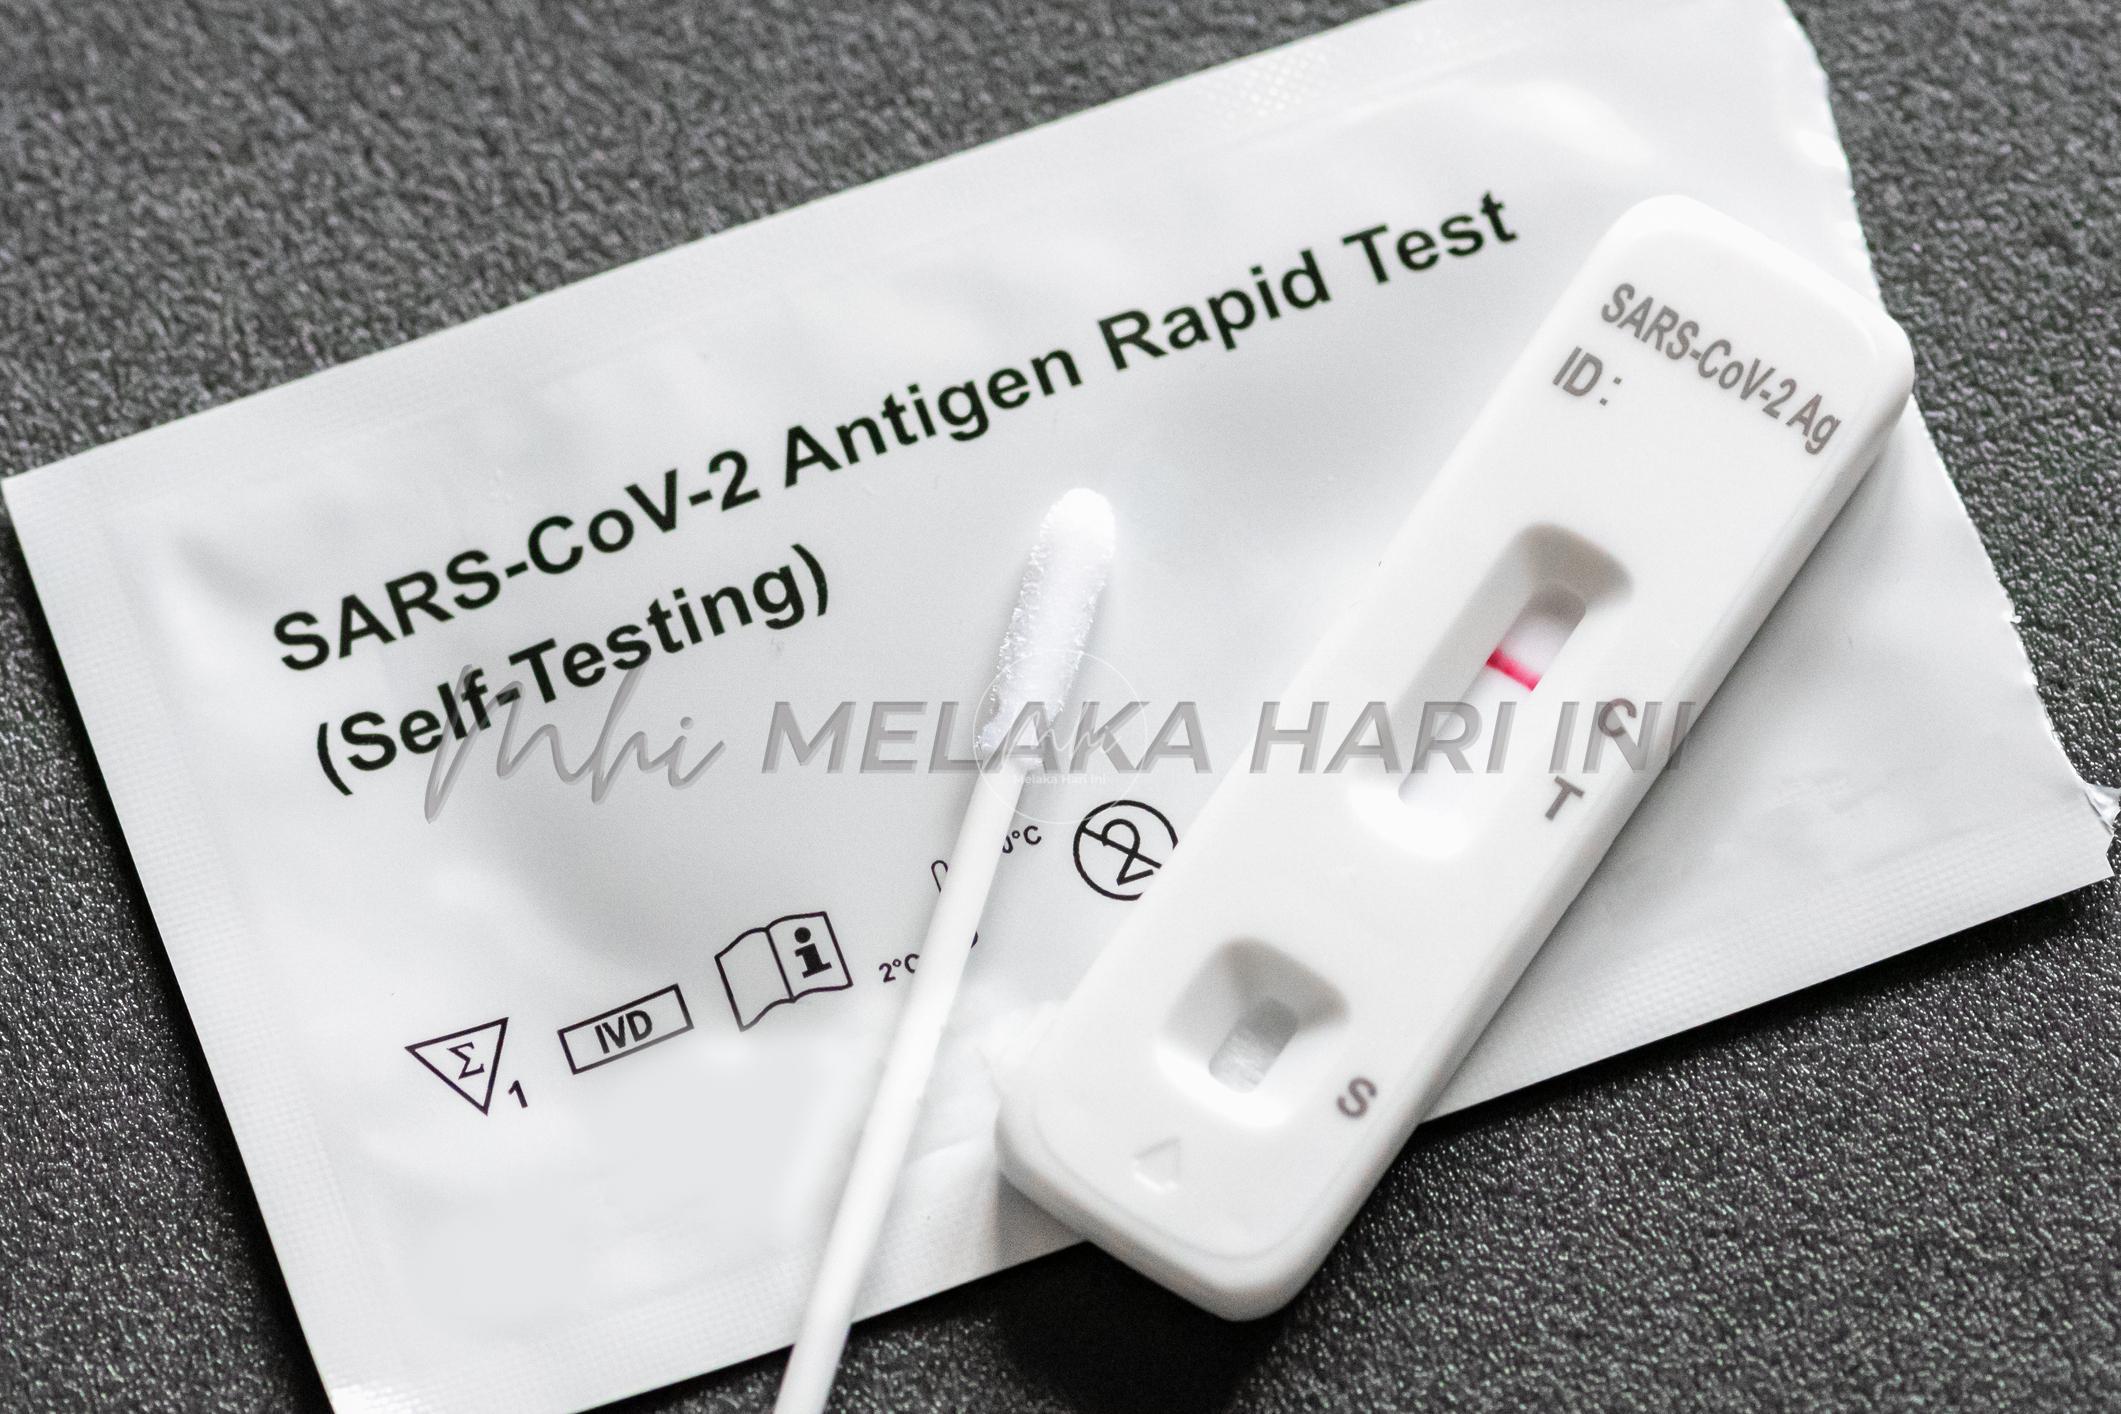 Negative Covid 19 Antigen Test Kit